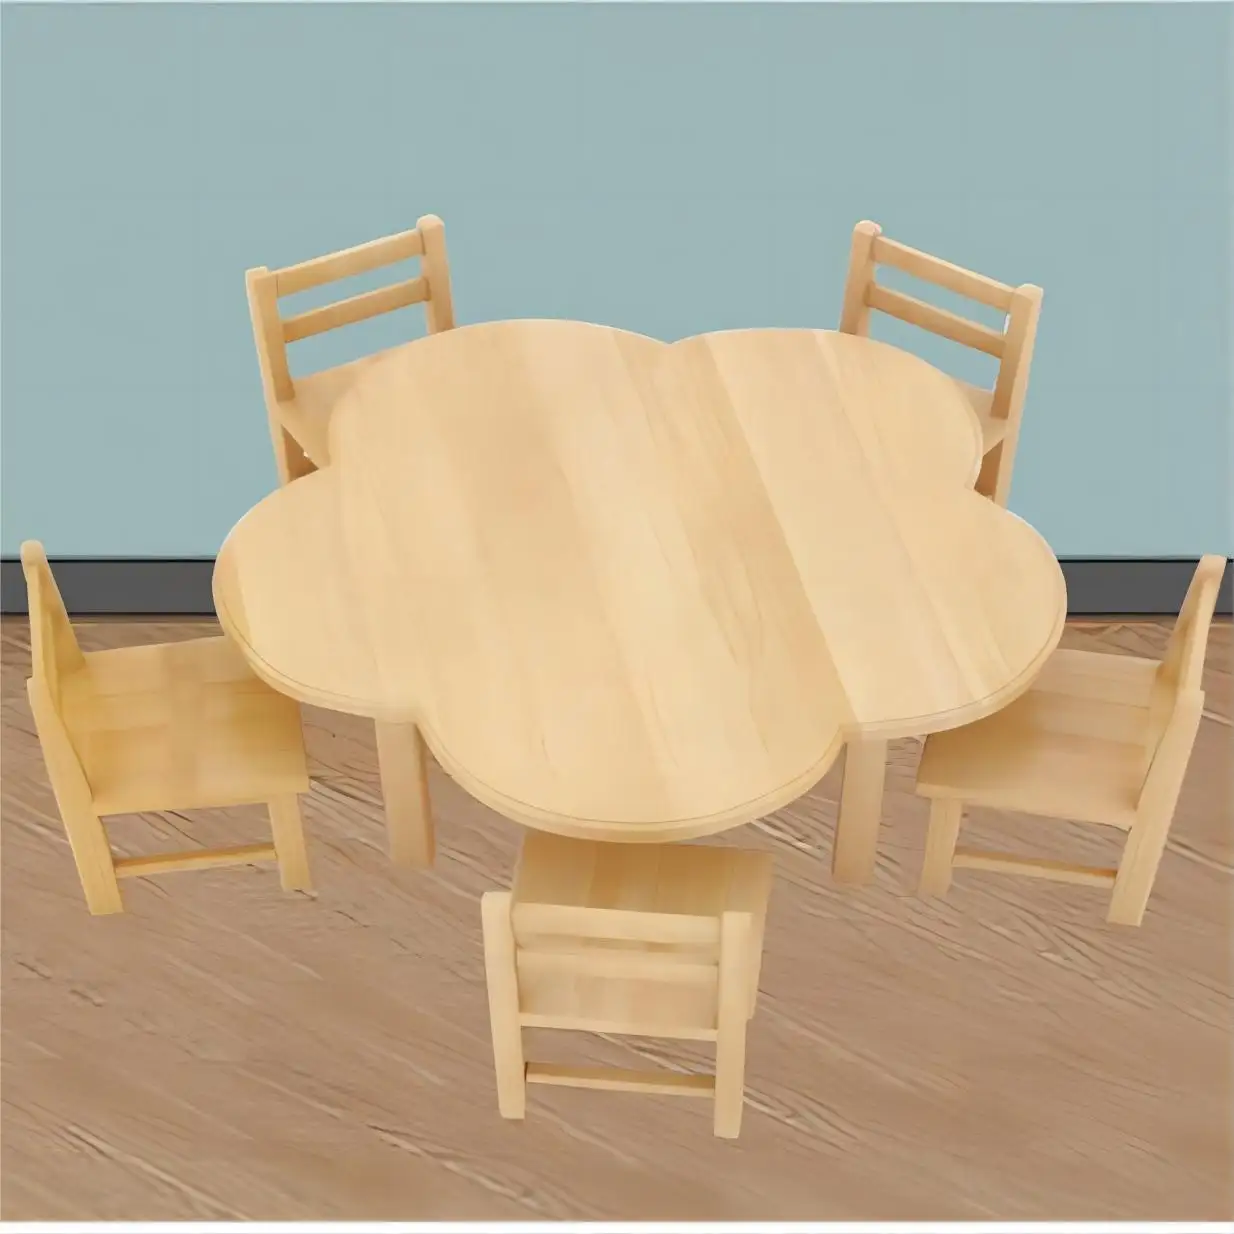 Preschool kids furniture children round table and chairs